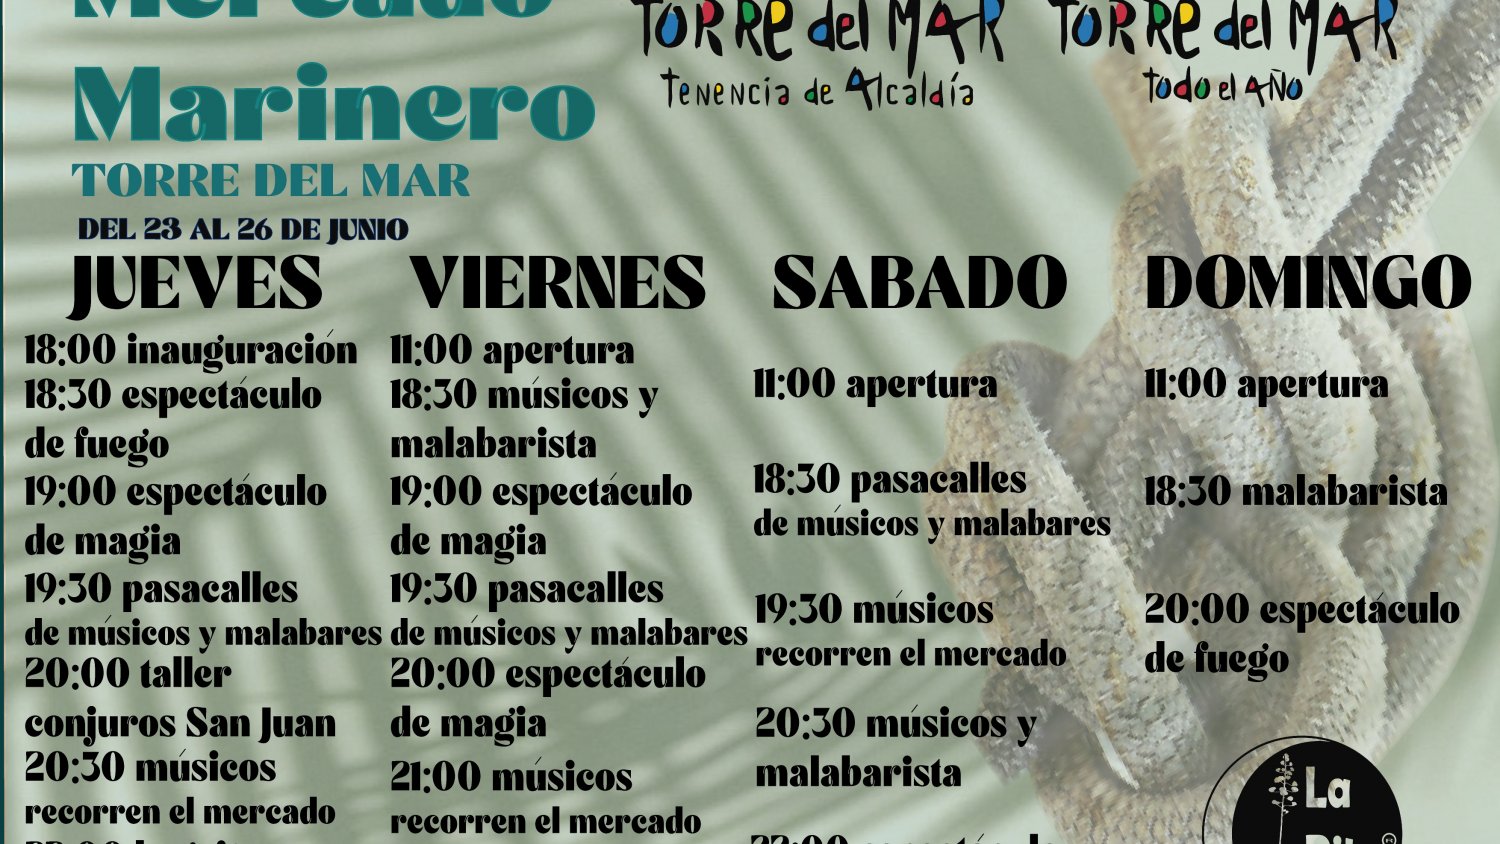 El tradicional Mercado Marinero de San Juan vuelve a Torre del Mar del 23 al 26 de junio